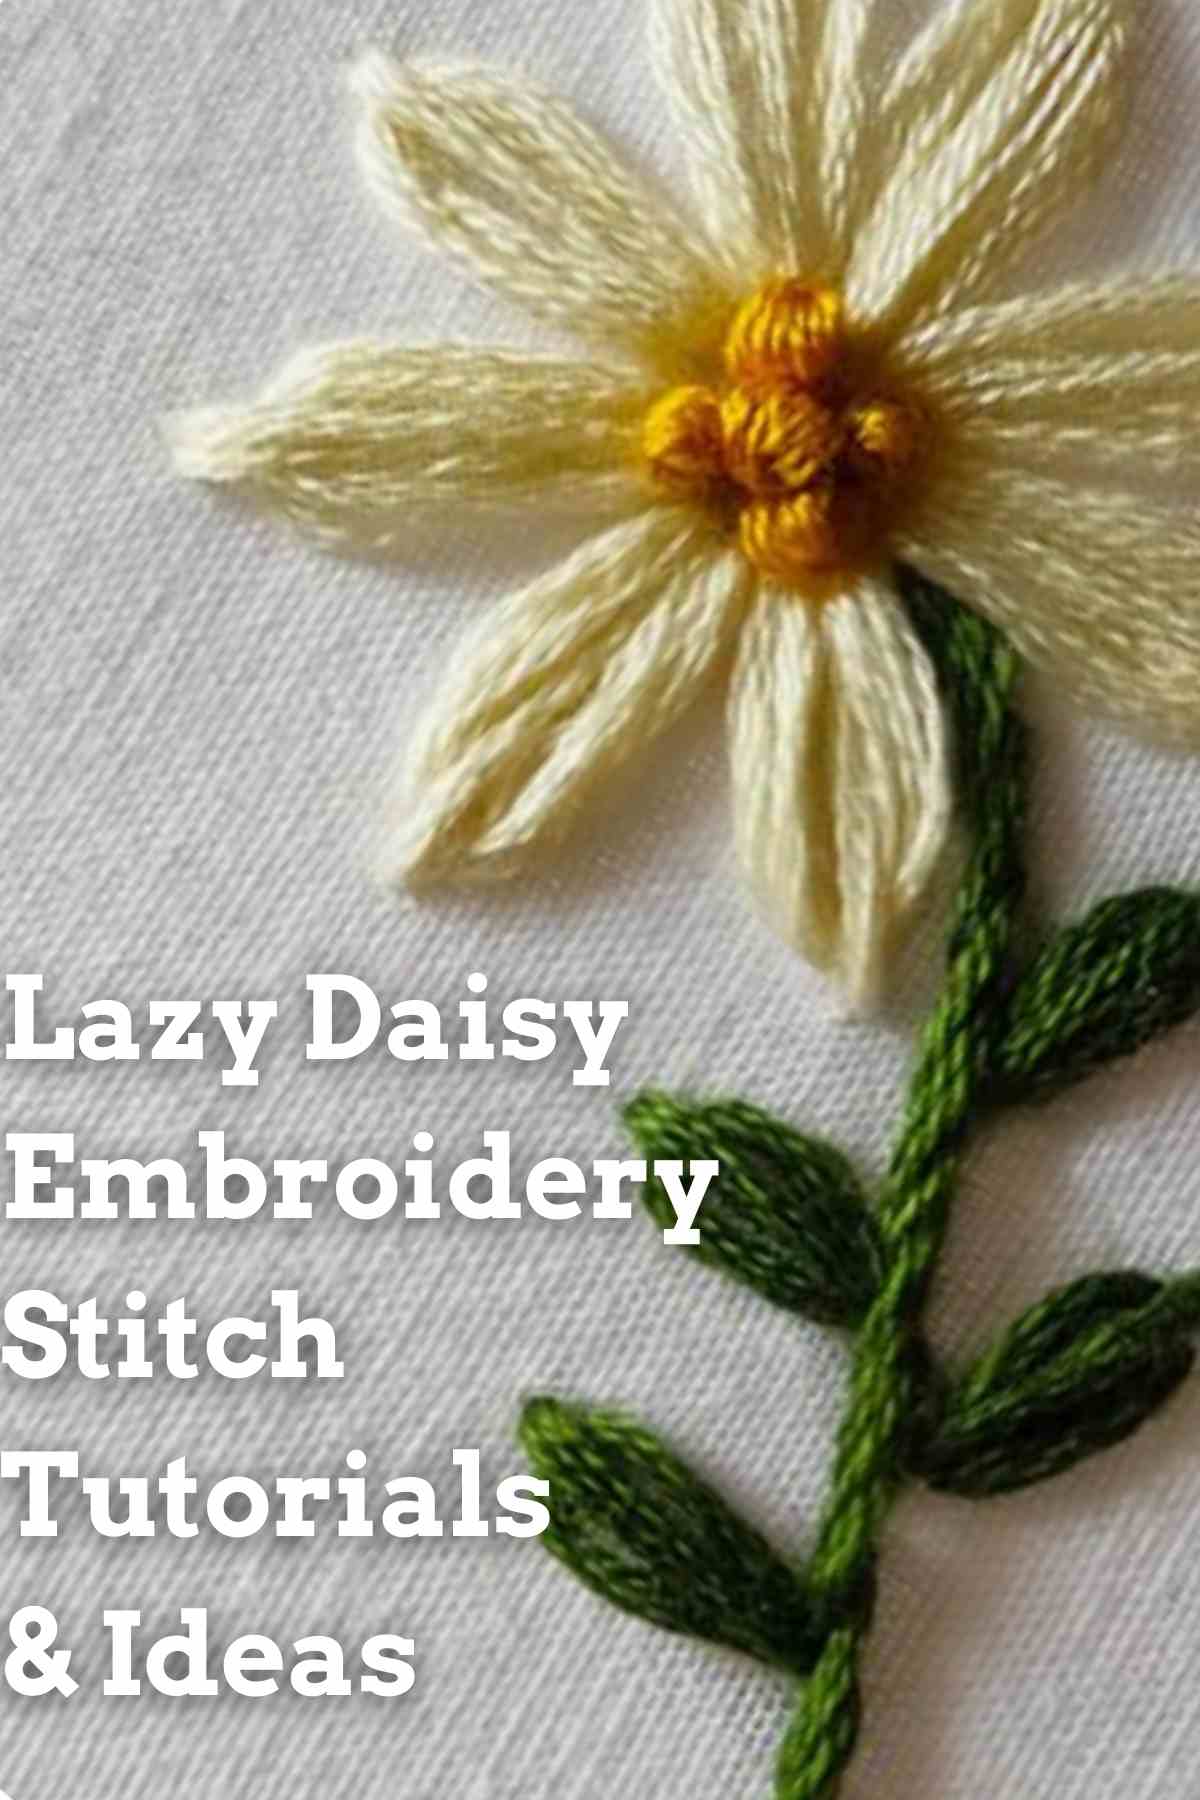 Lazy daisy stitching ideas